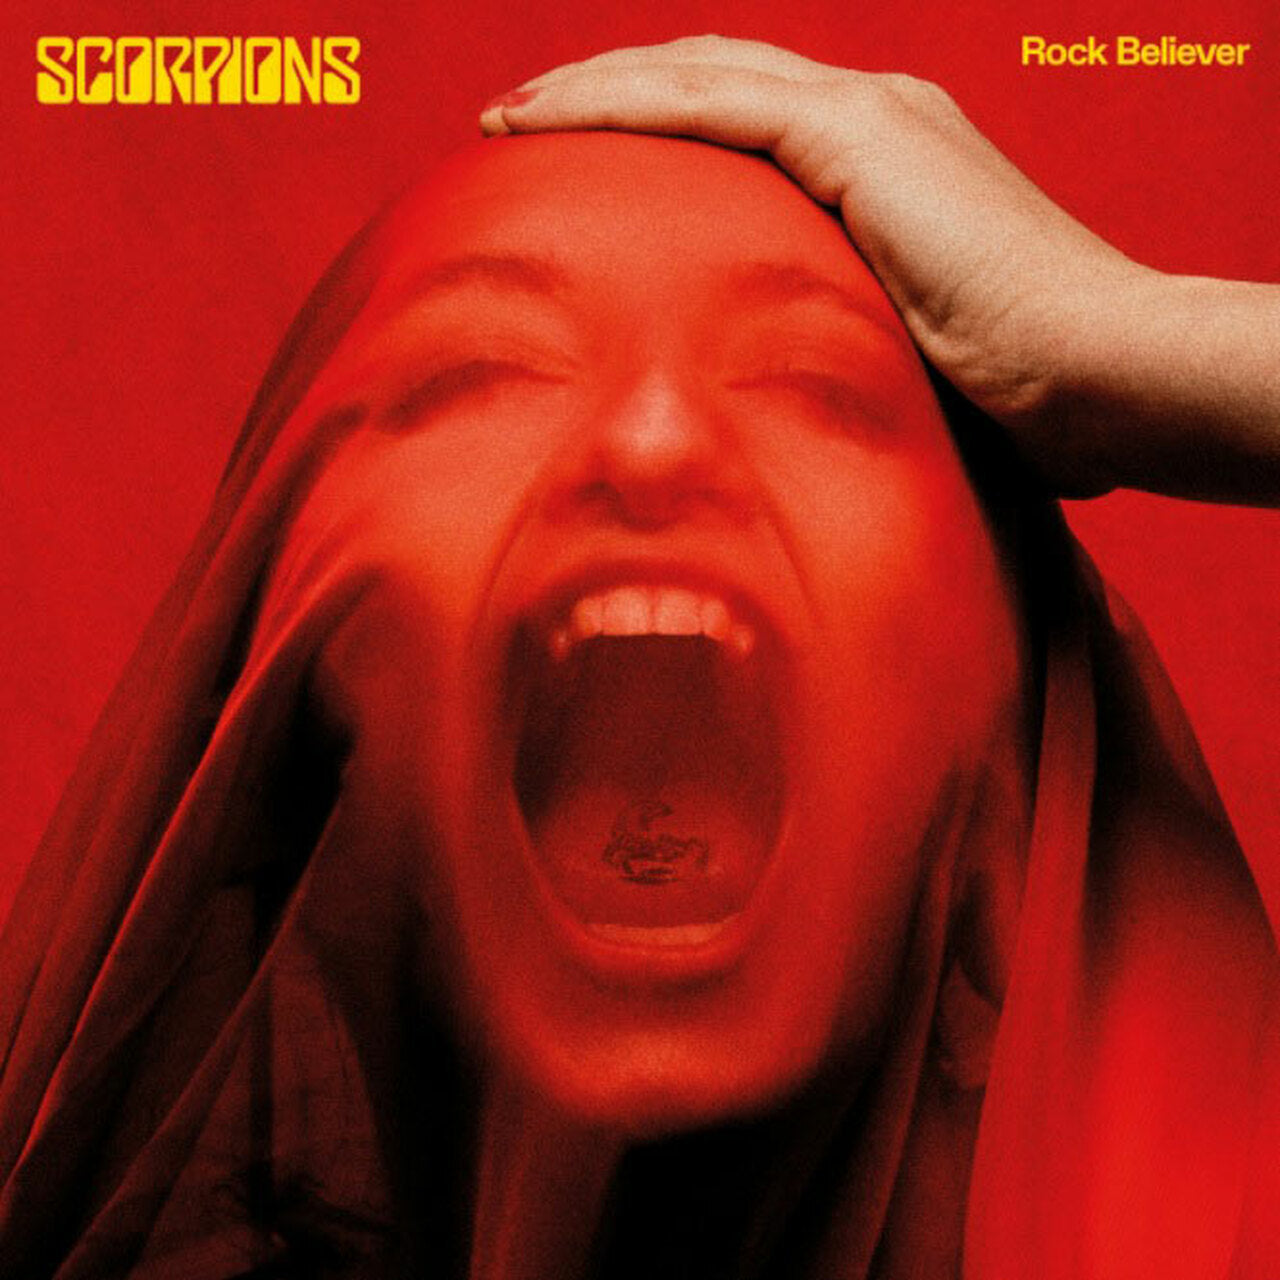 The Scorpions - Rock Believer (2LP Gatefold Sleeve)